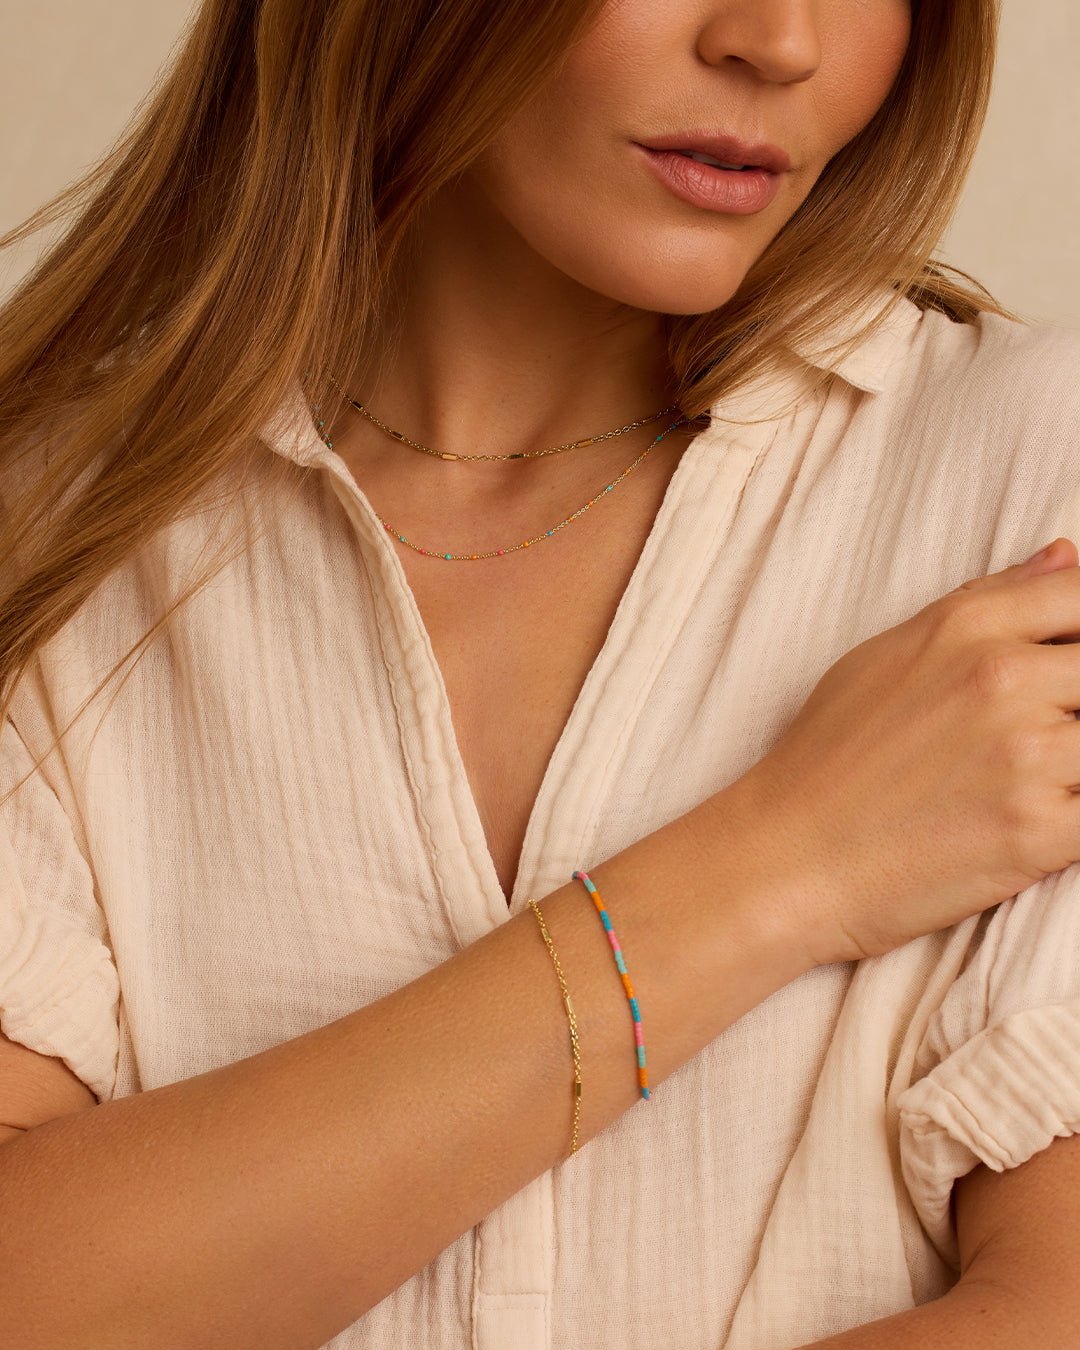 Gigi Stripe Adjustable Bracelet || option::Gold Plated, Miami